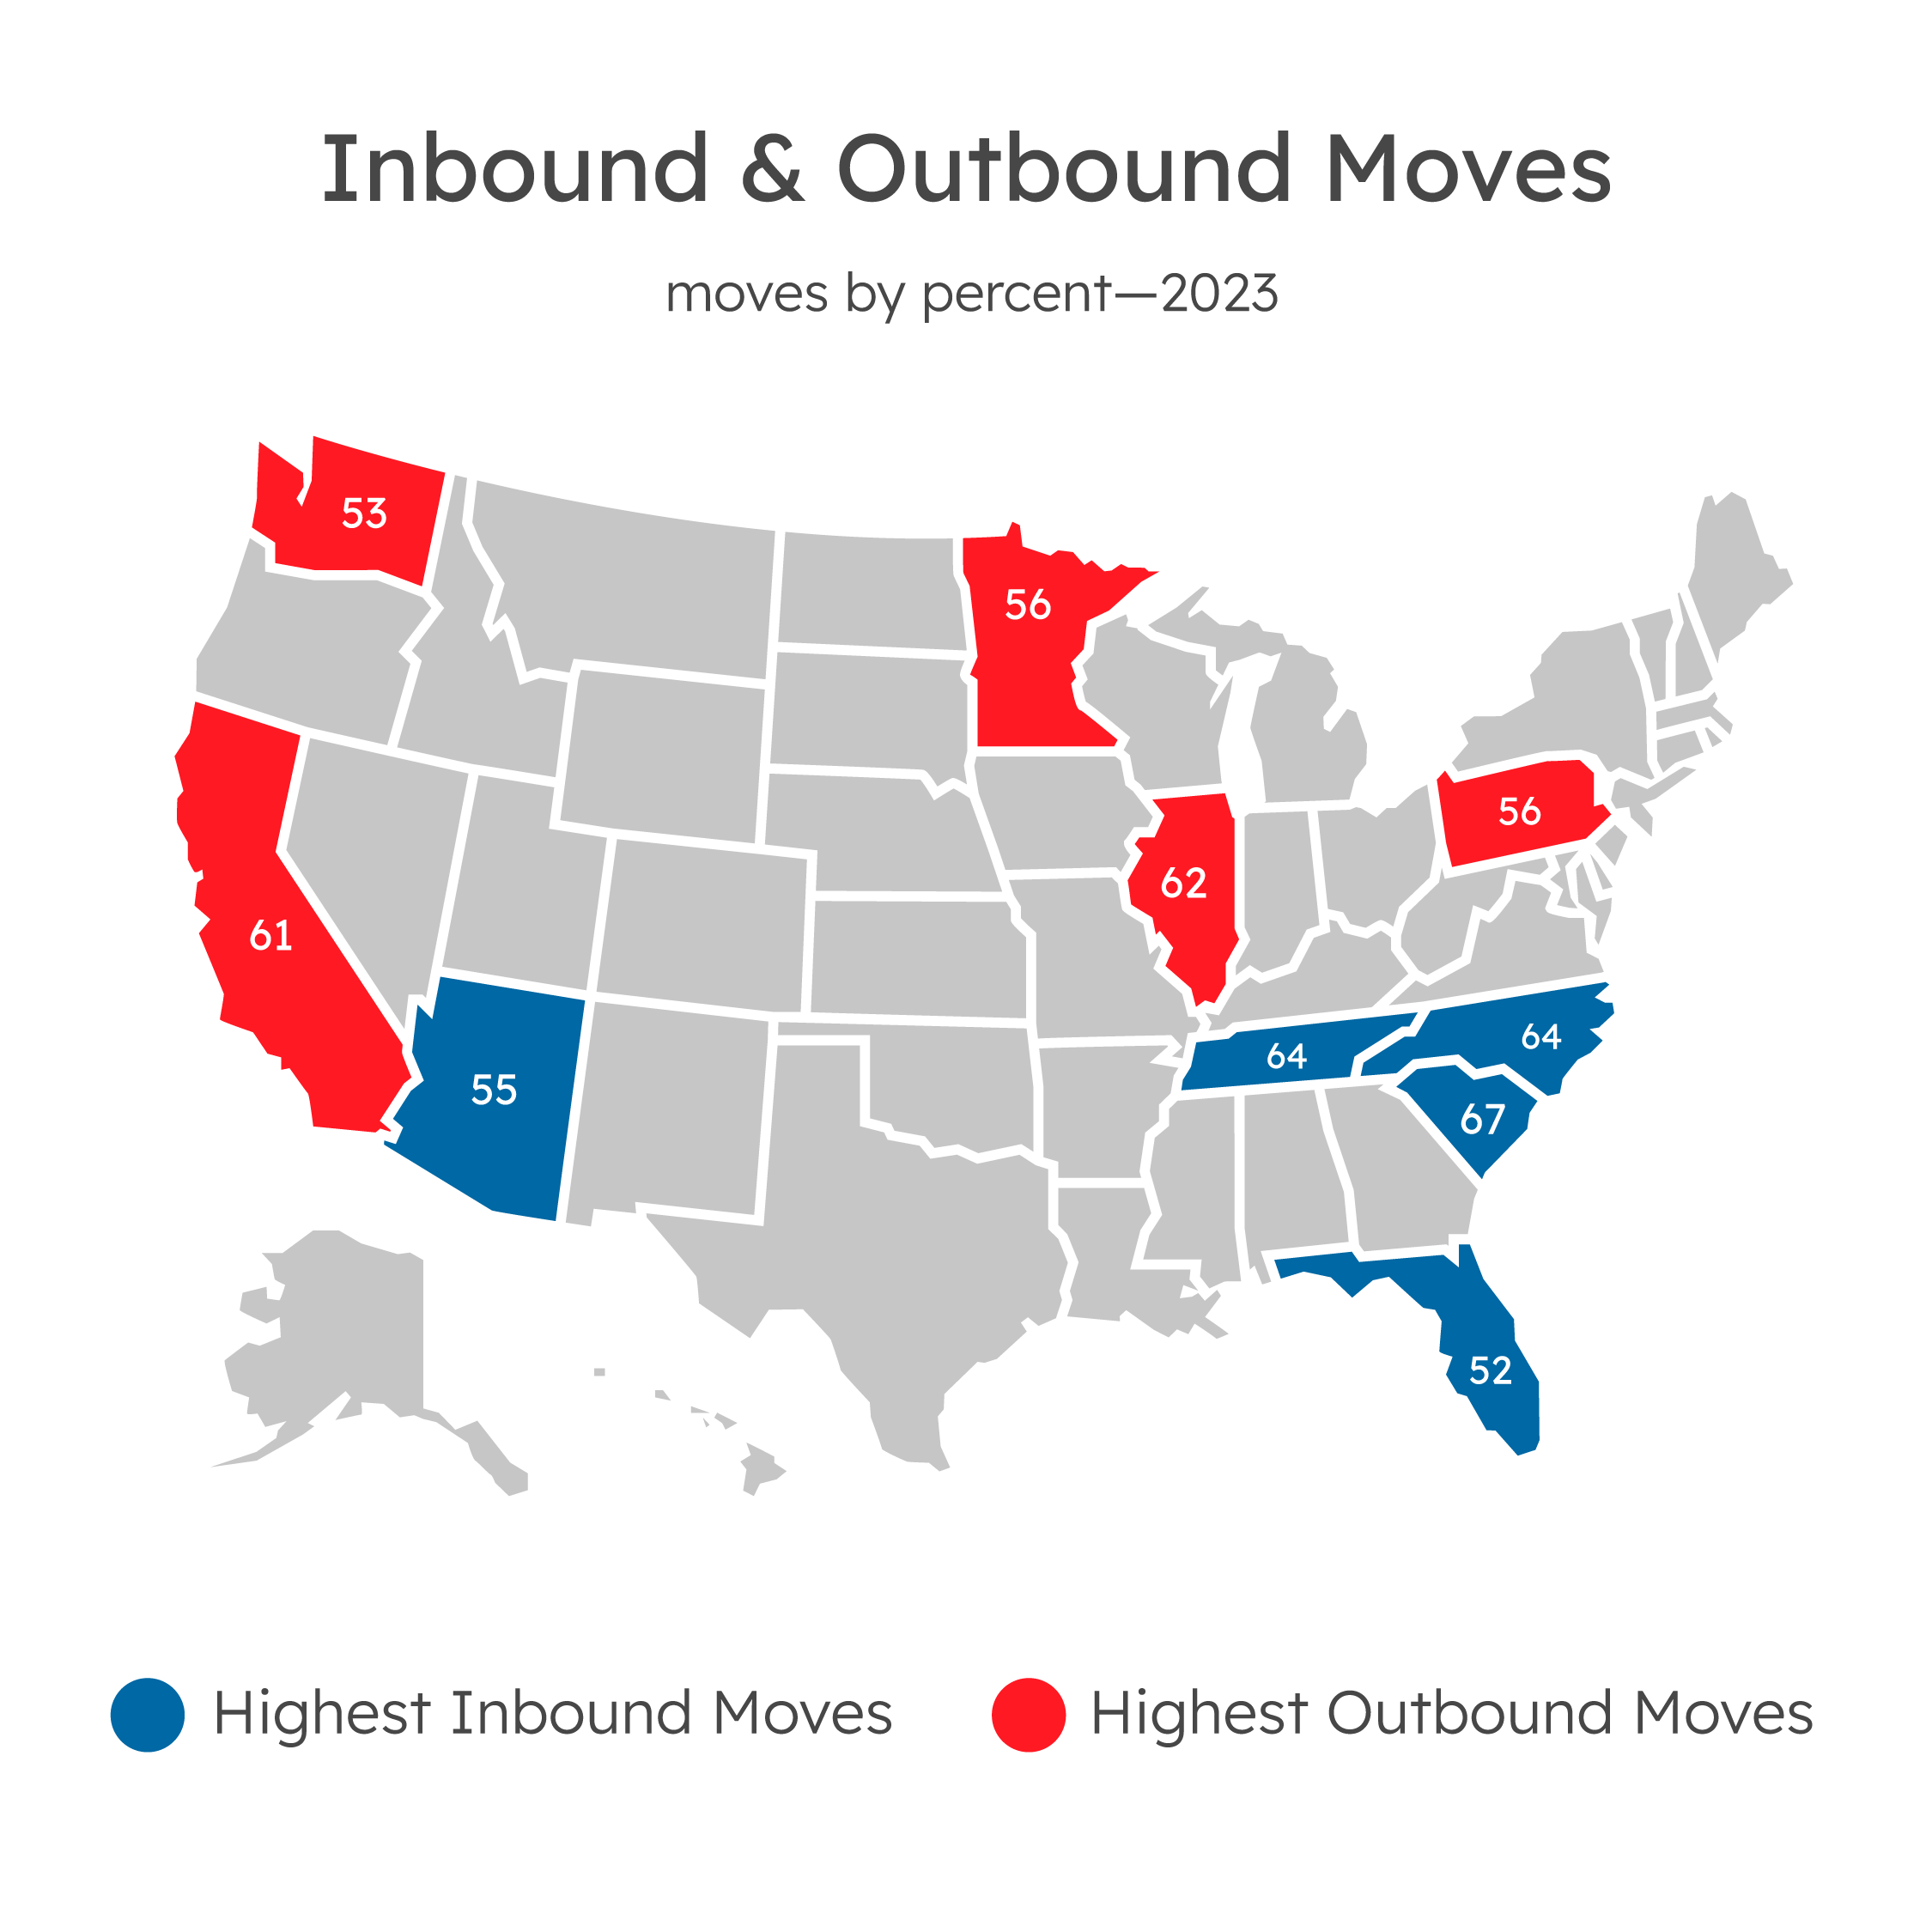 Inbound & Outbound Moves Blue States HIghest Inbound, Red States Highest Outbound